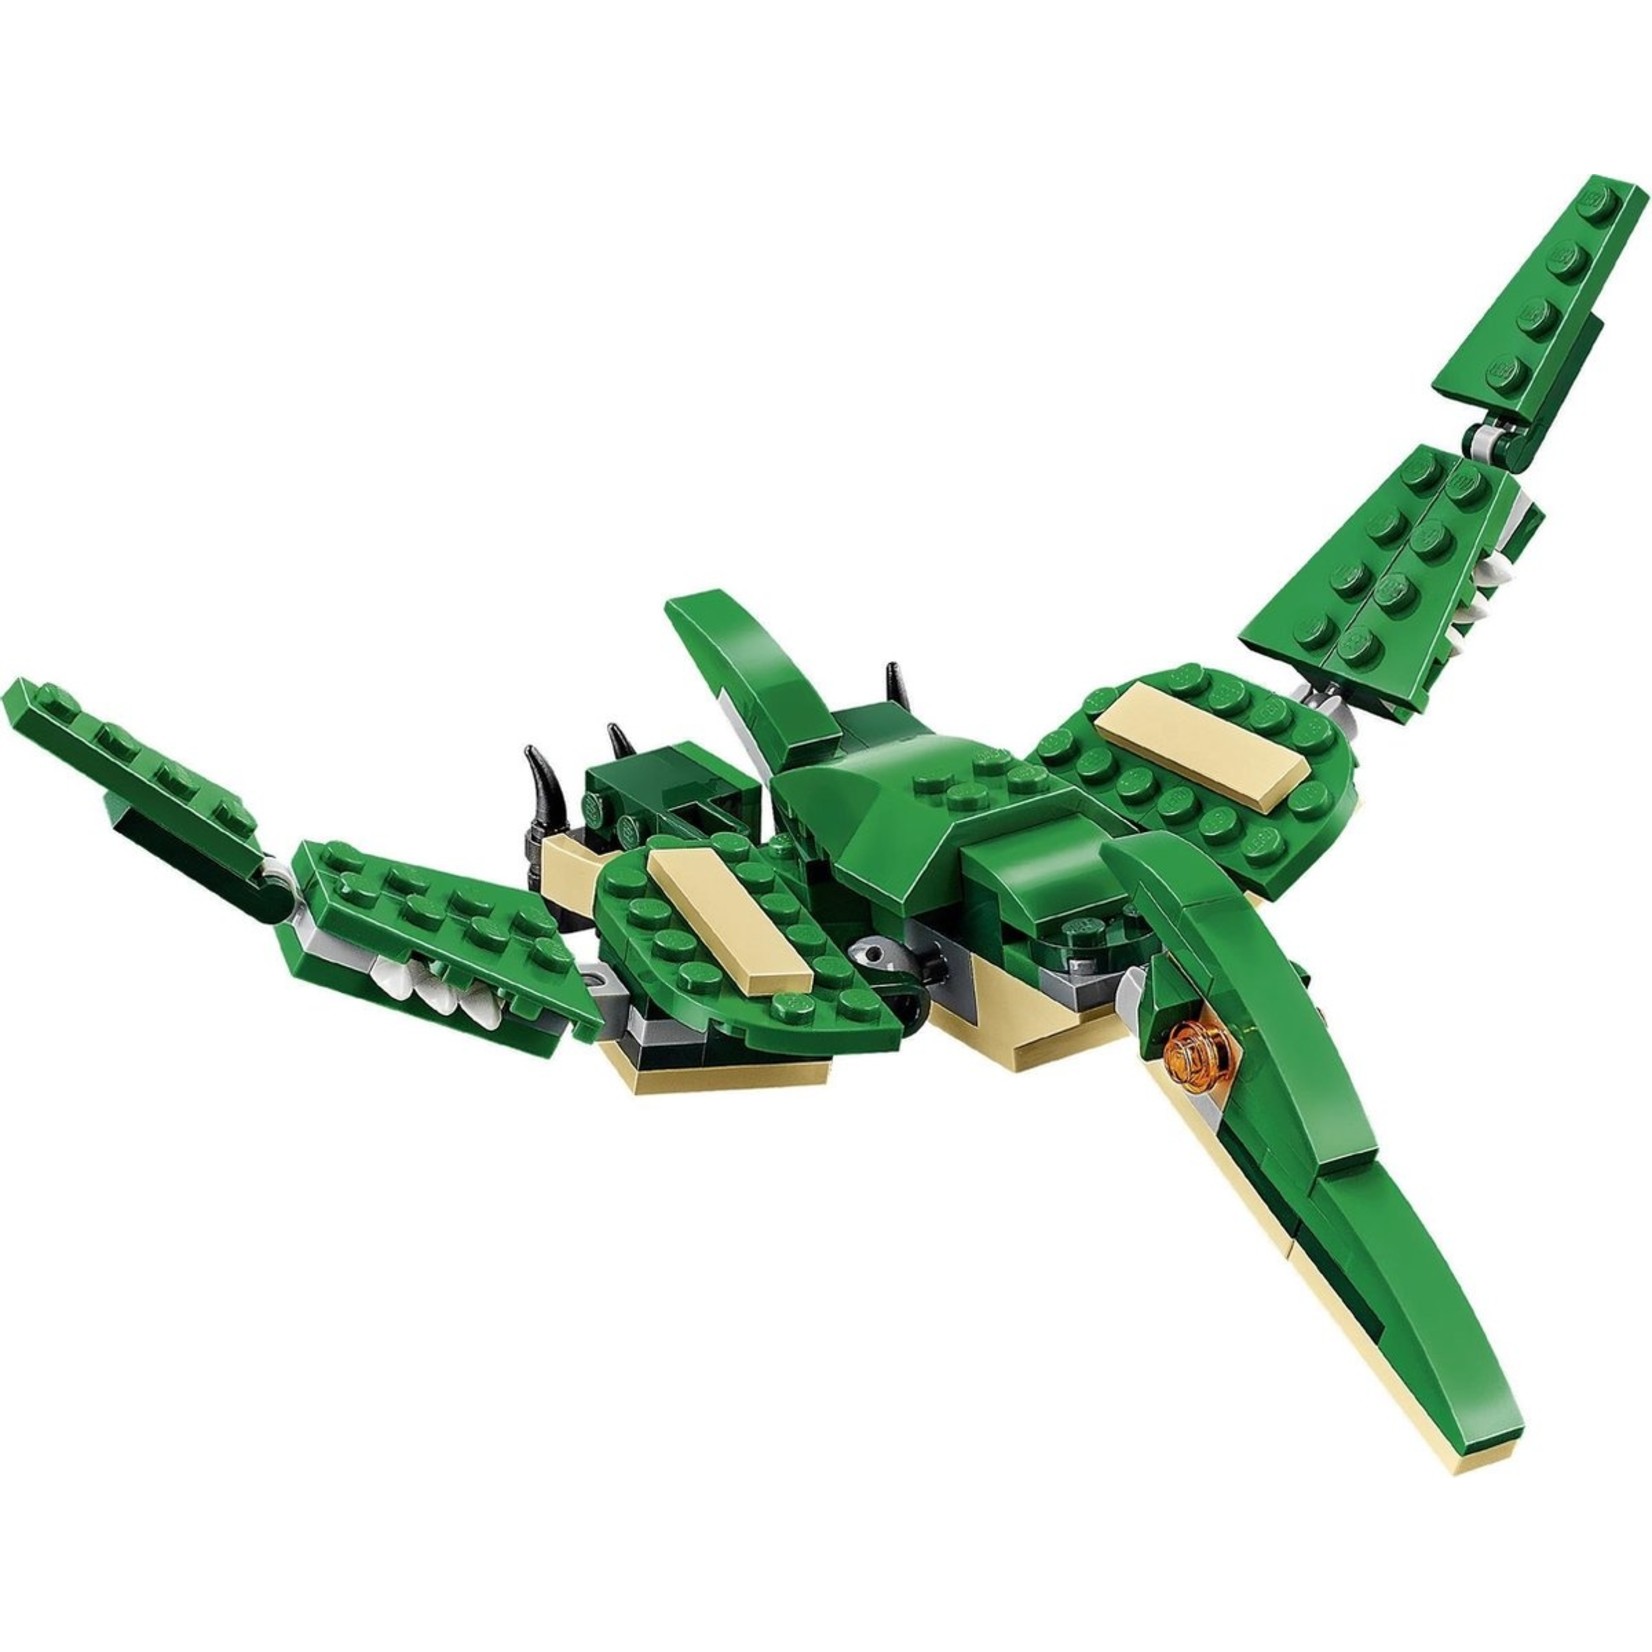 LEGO LEGO Creator Machtige Dinosaurussen - 31058